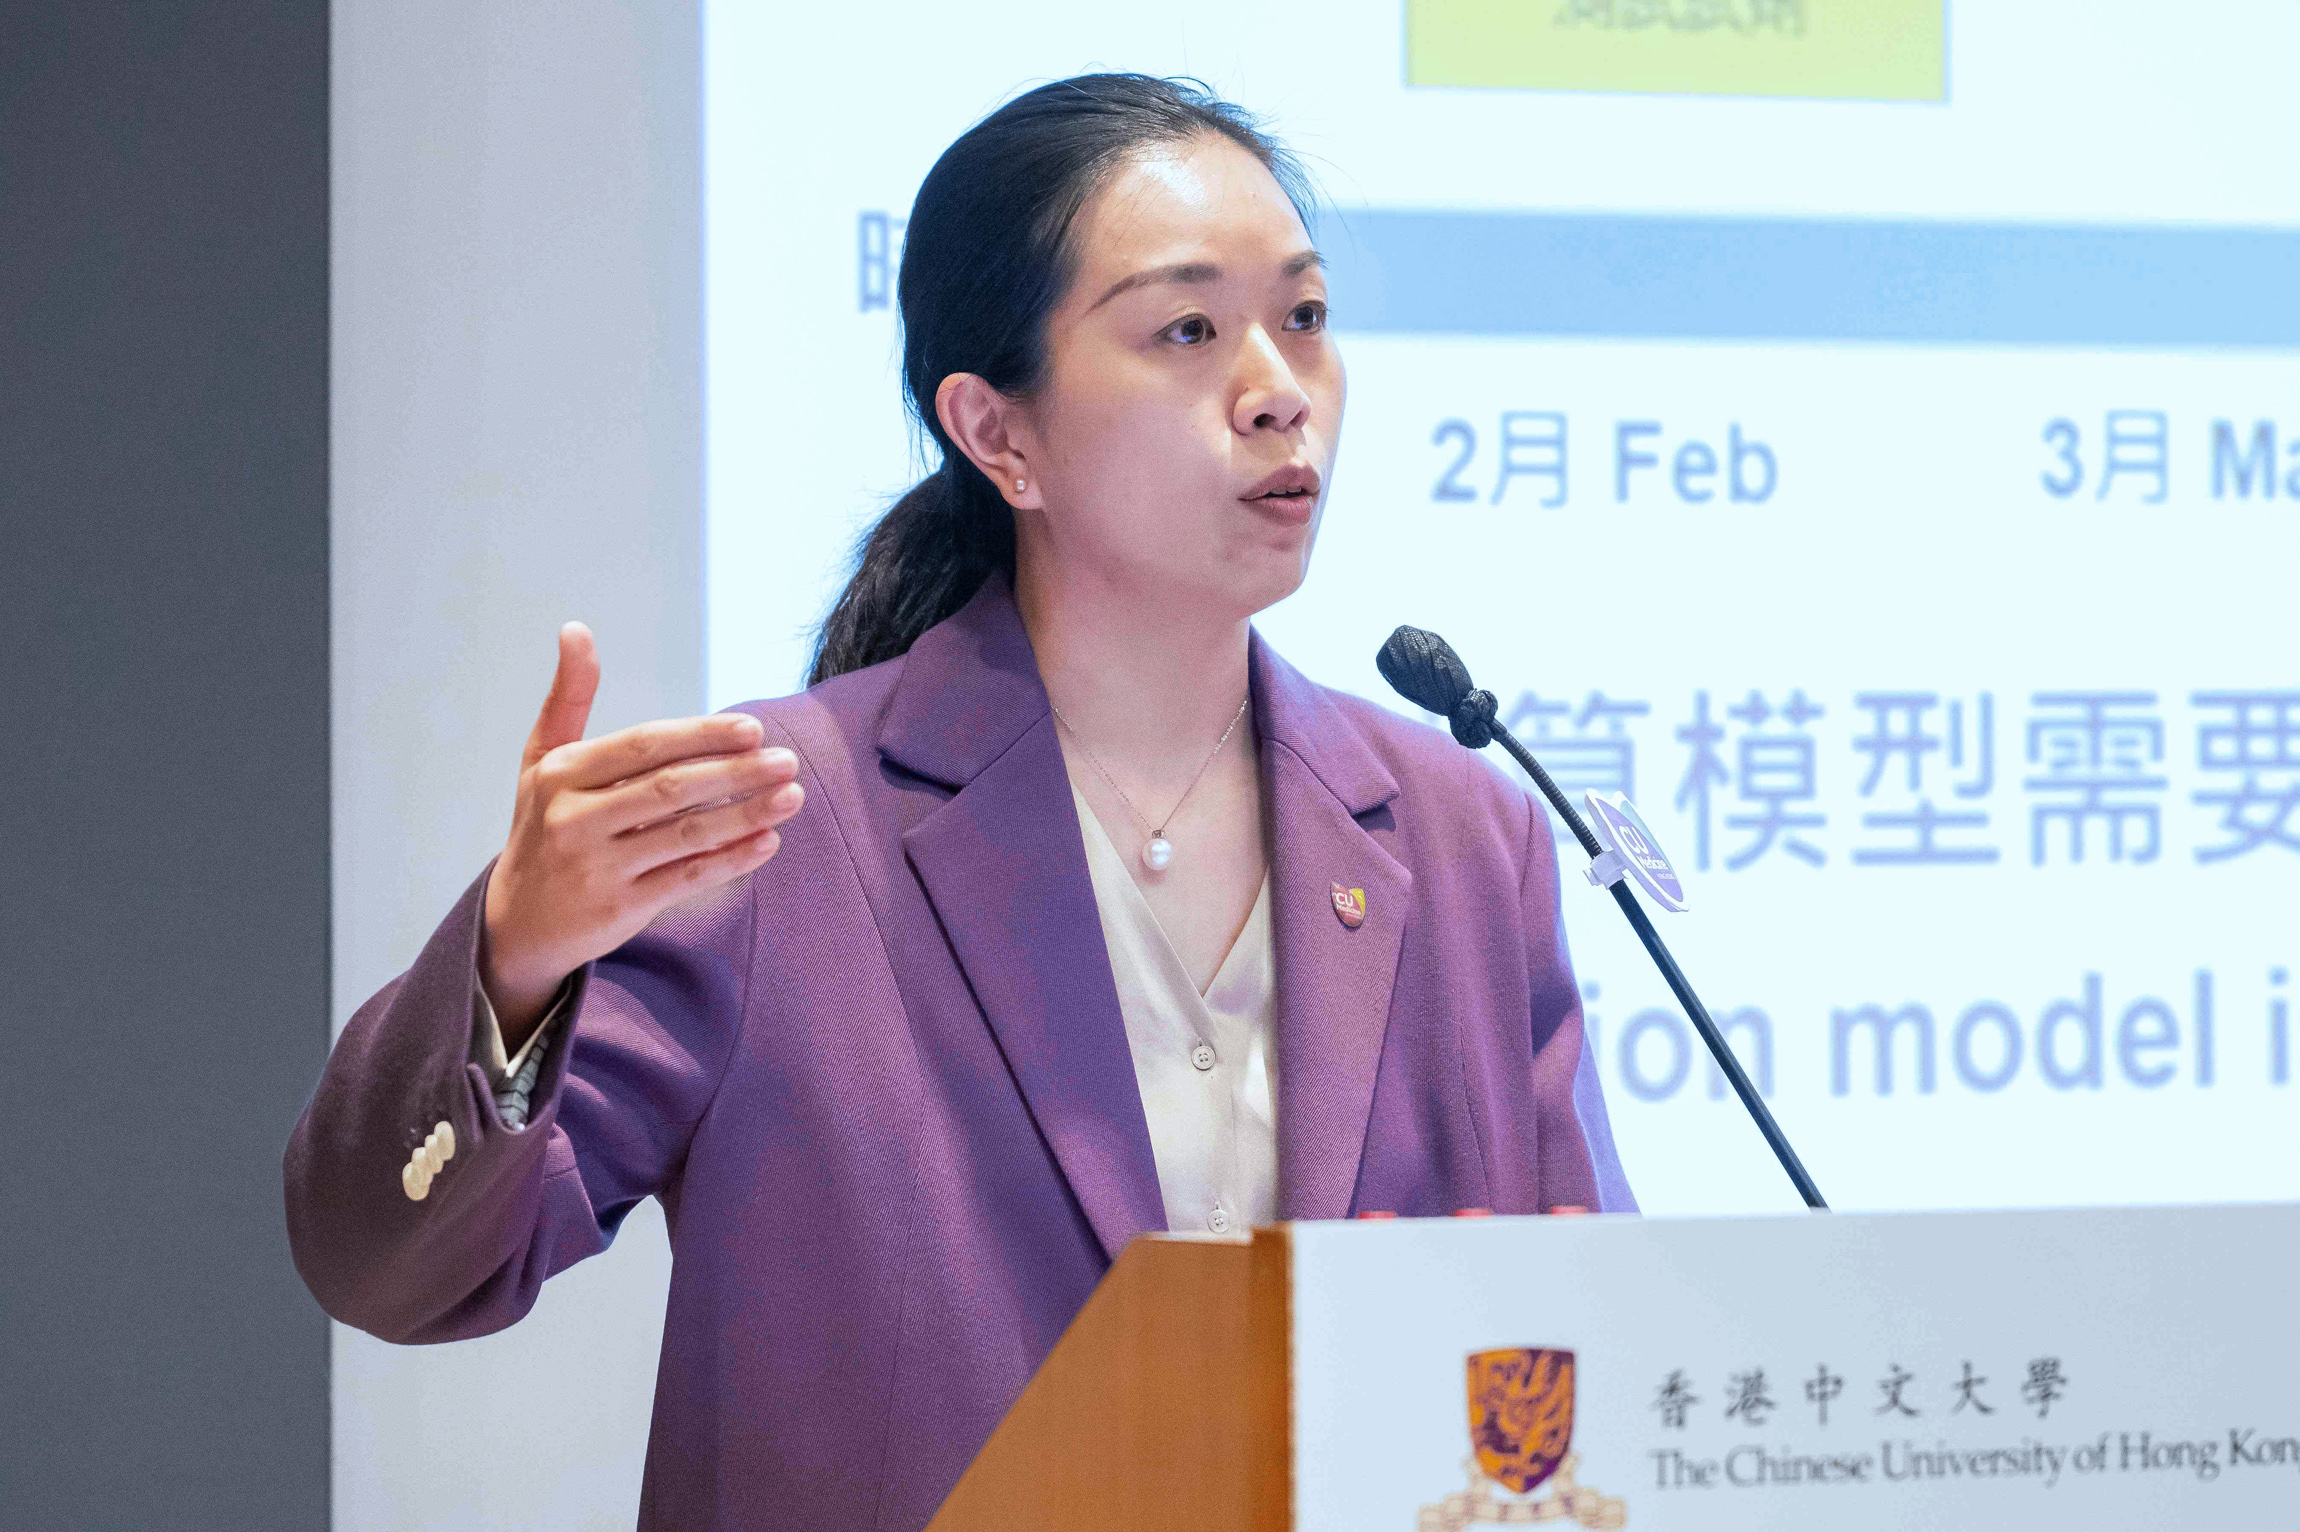 Professor Maggie Wang